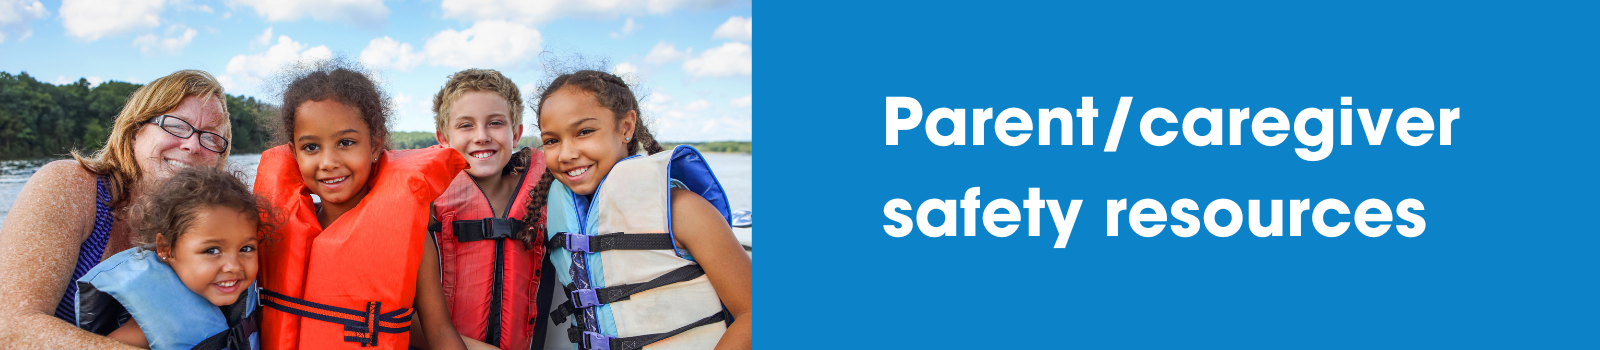 Parent/caregiver safety resources